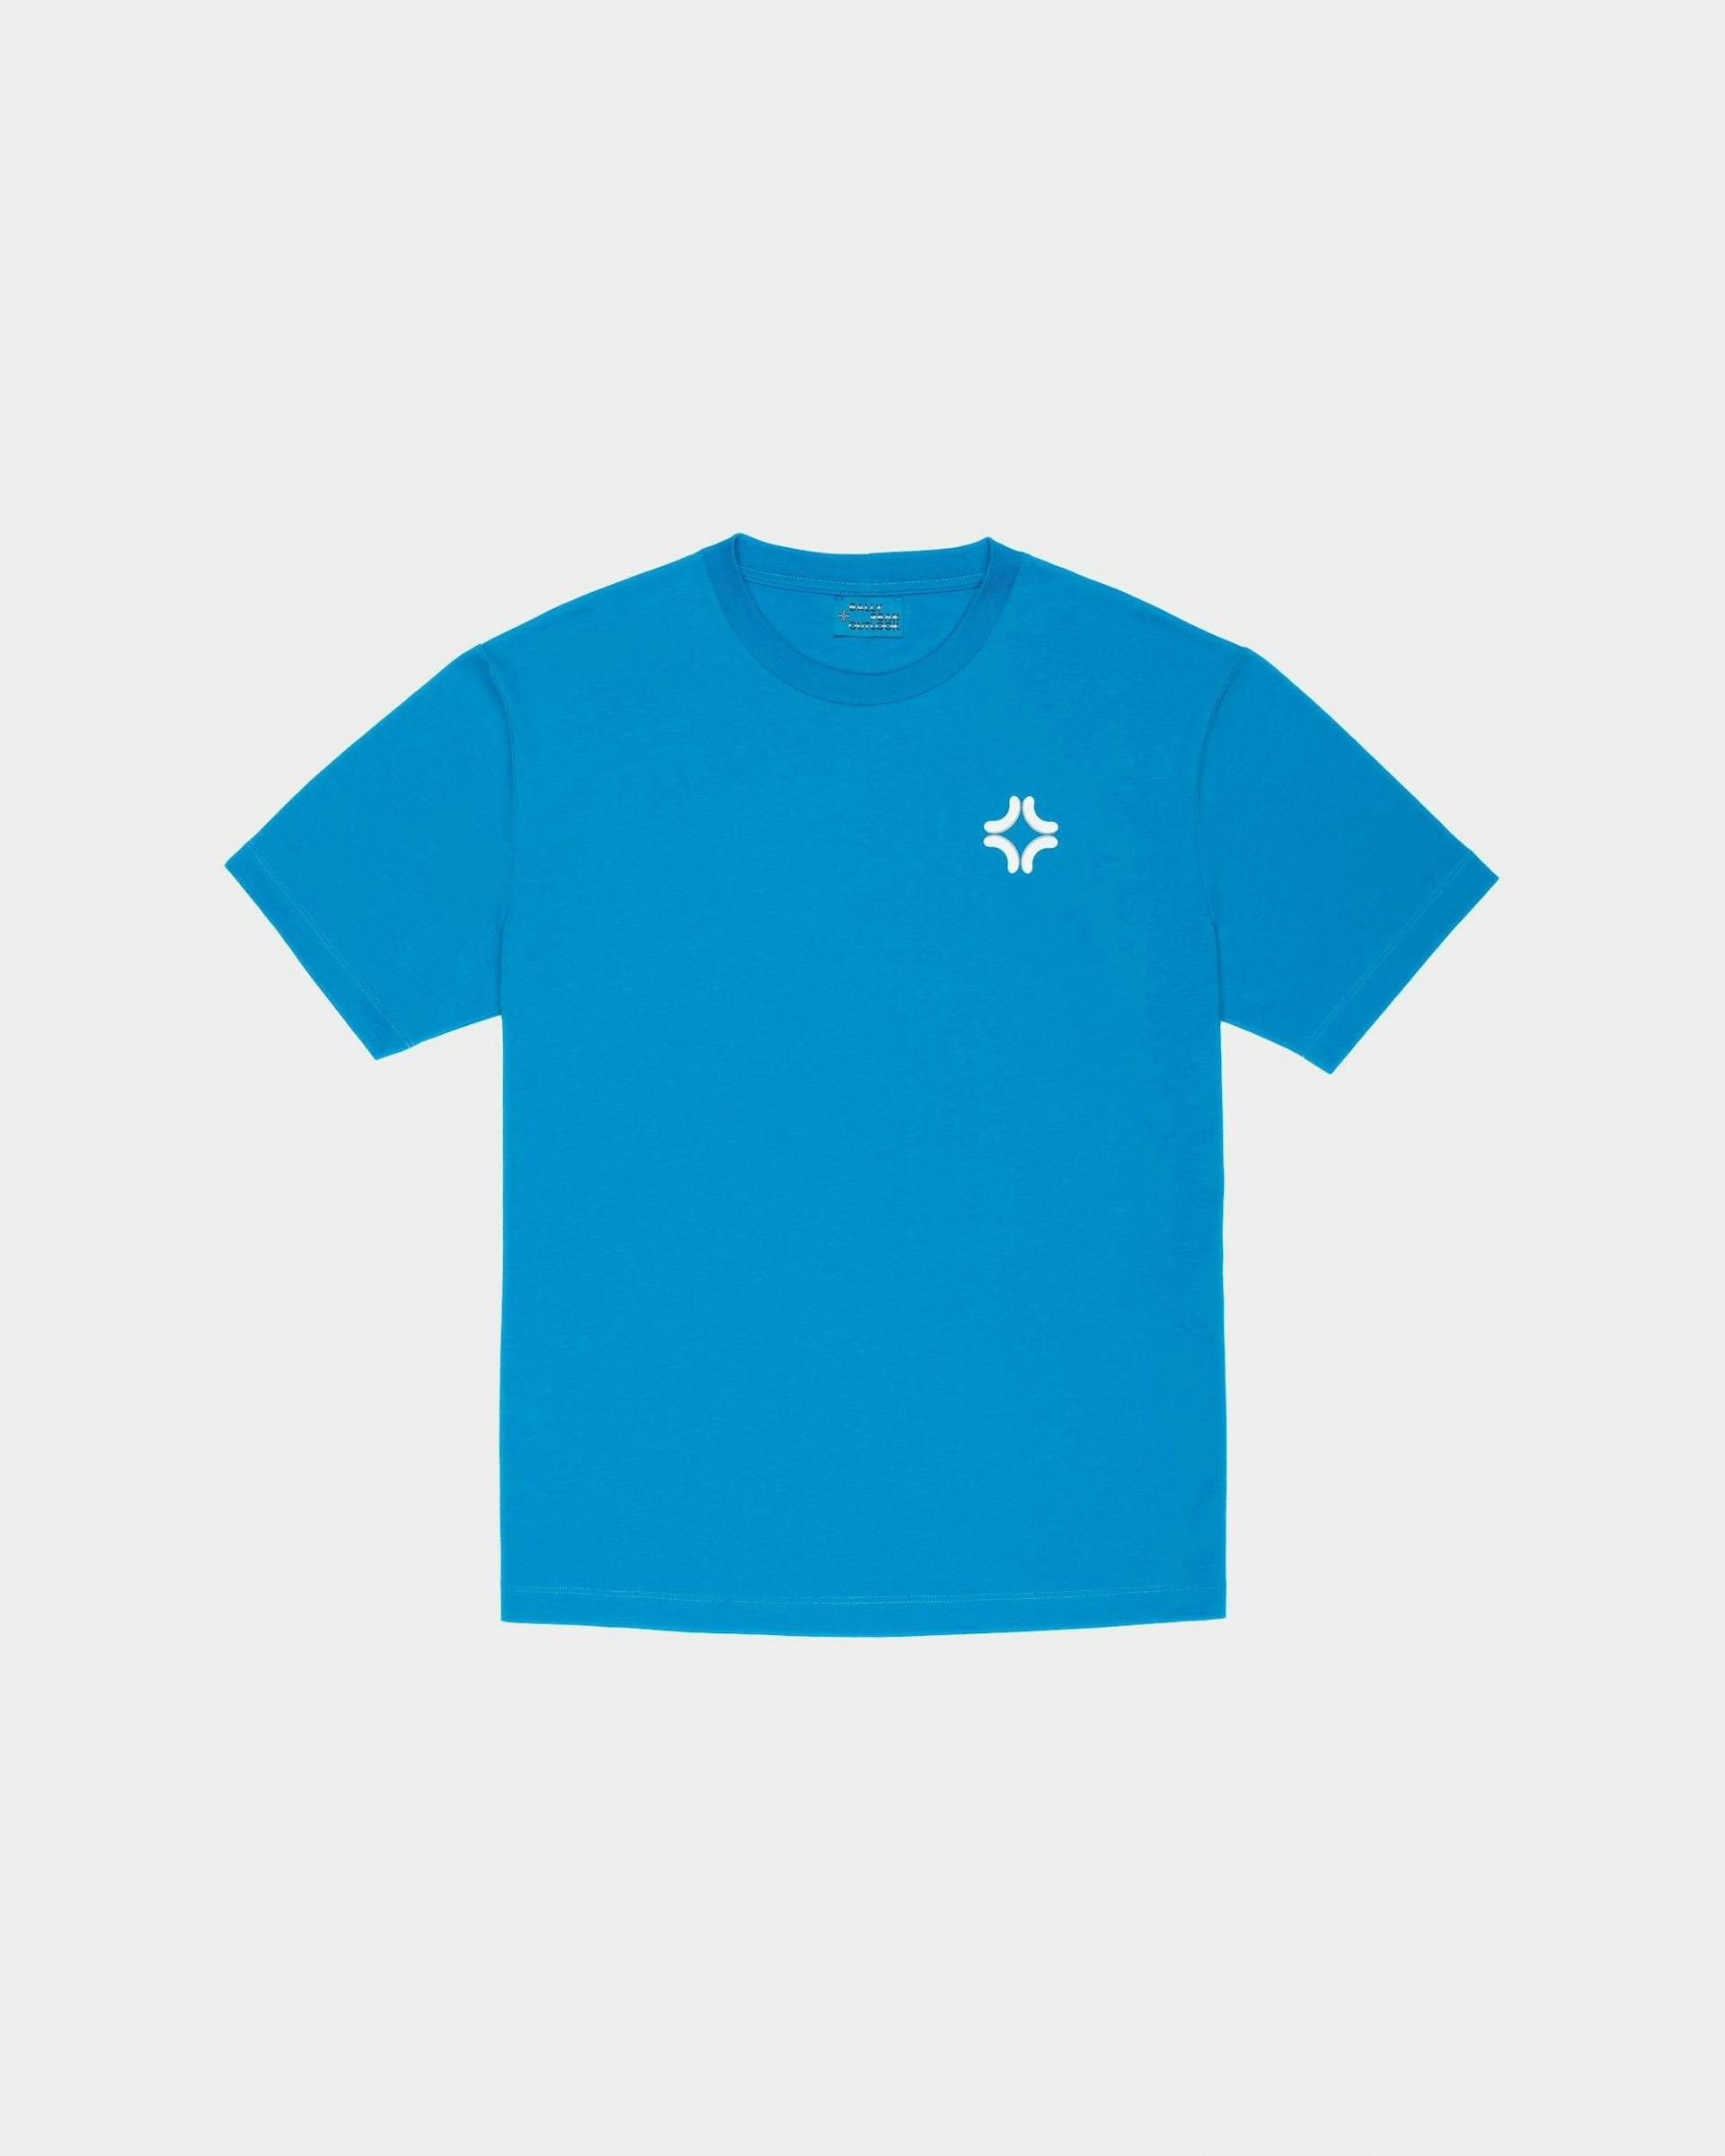 T-Shirt Bally Peak Outlook In Cotone Organico Colore Blu - Donna - Bally - 01